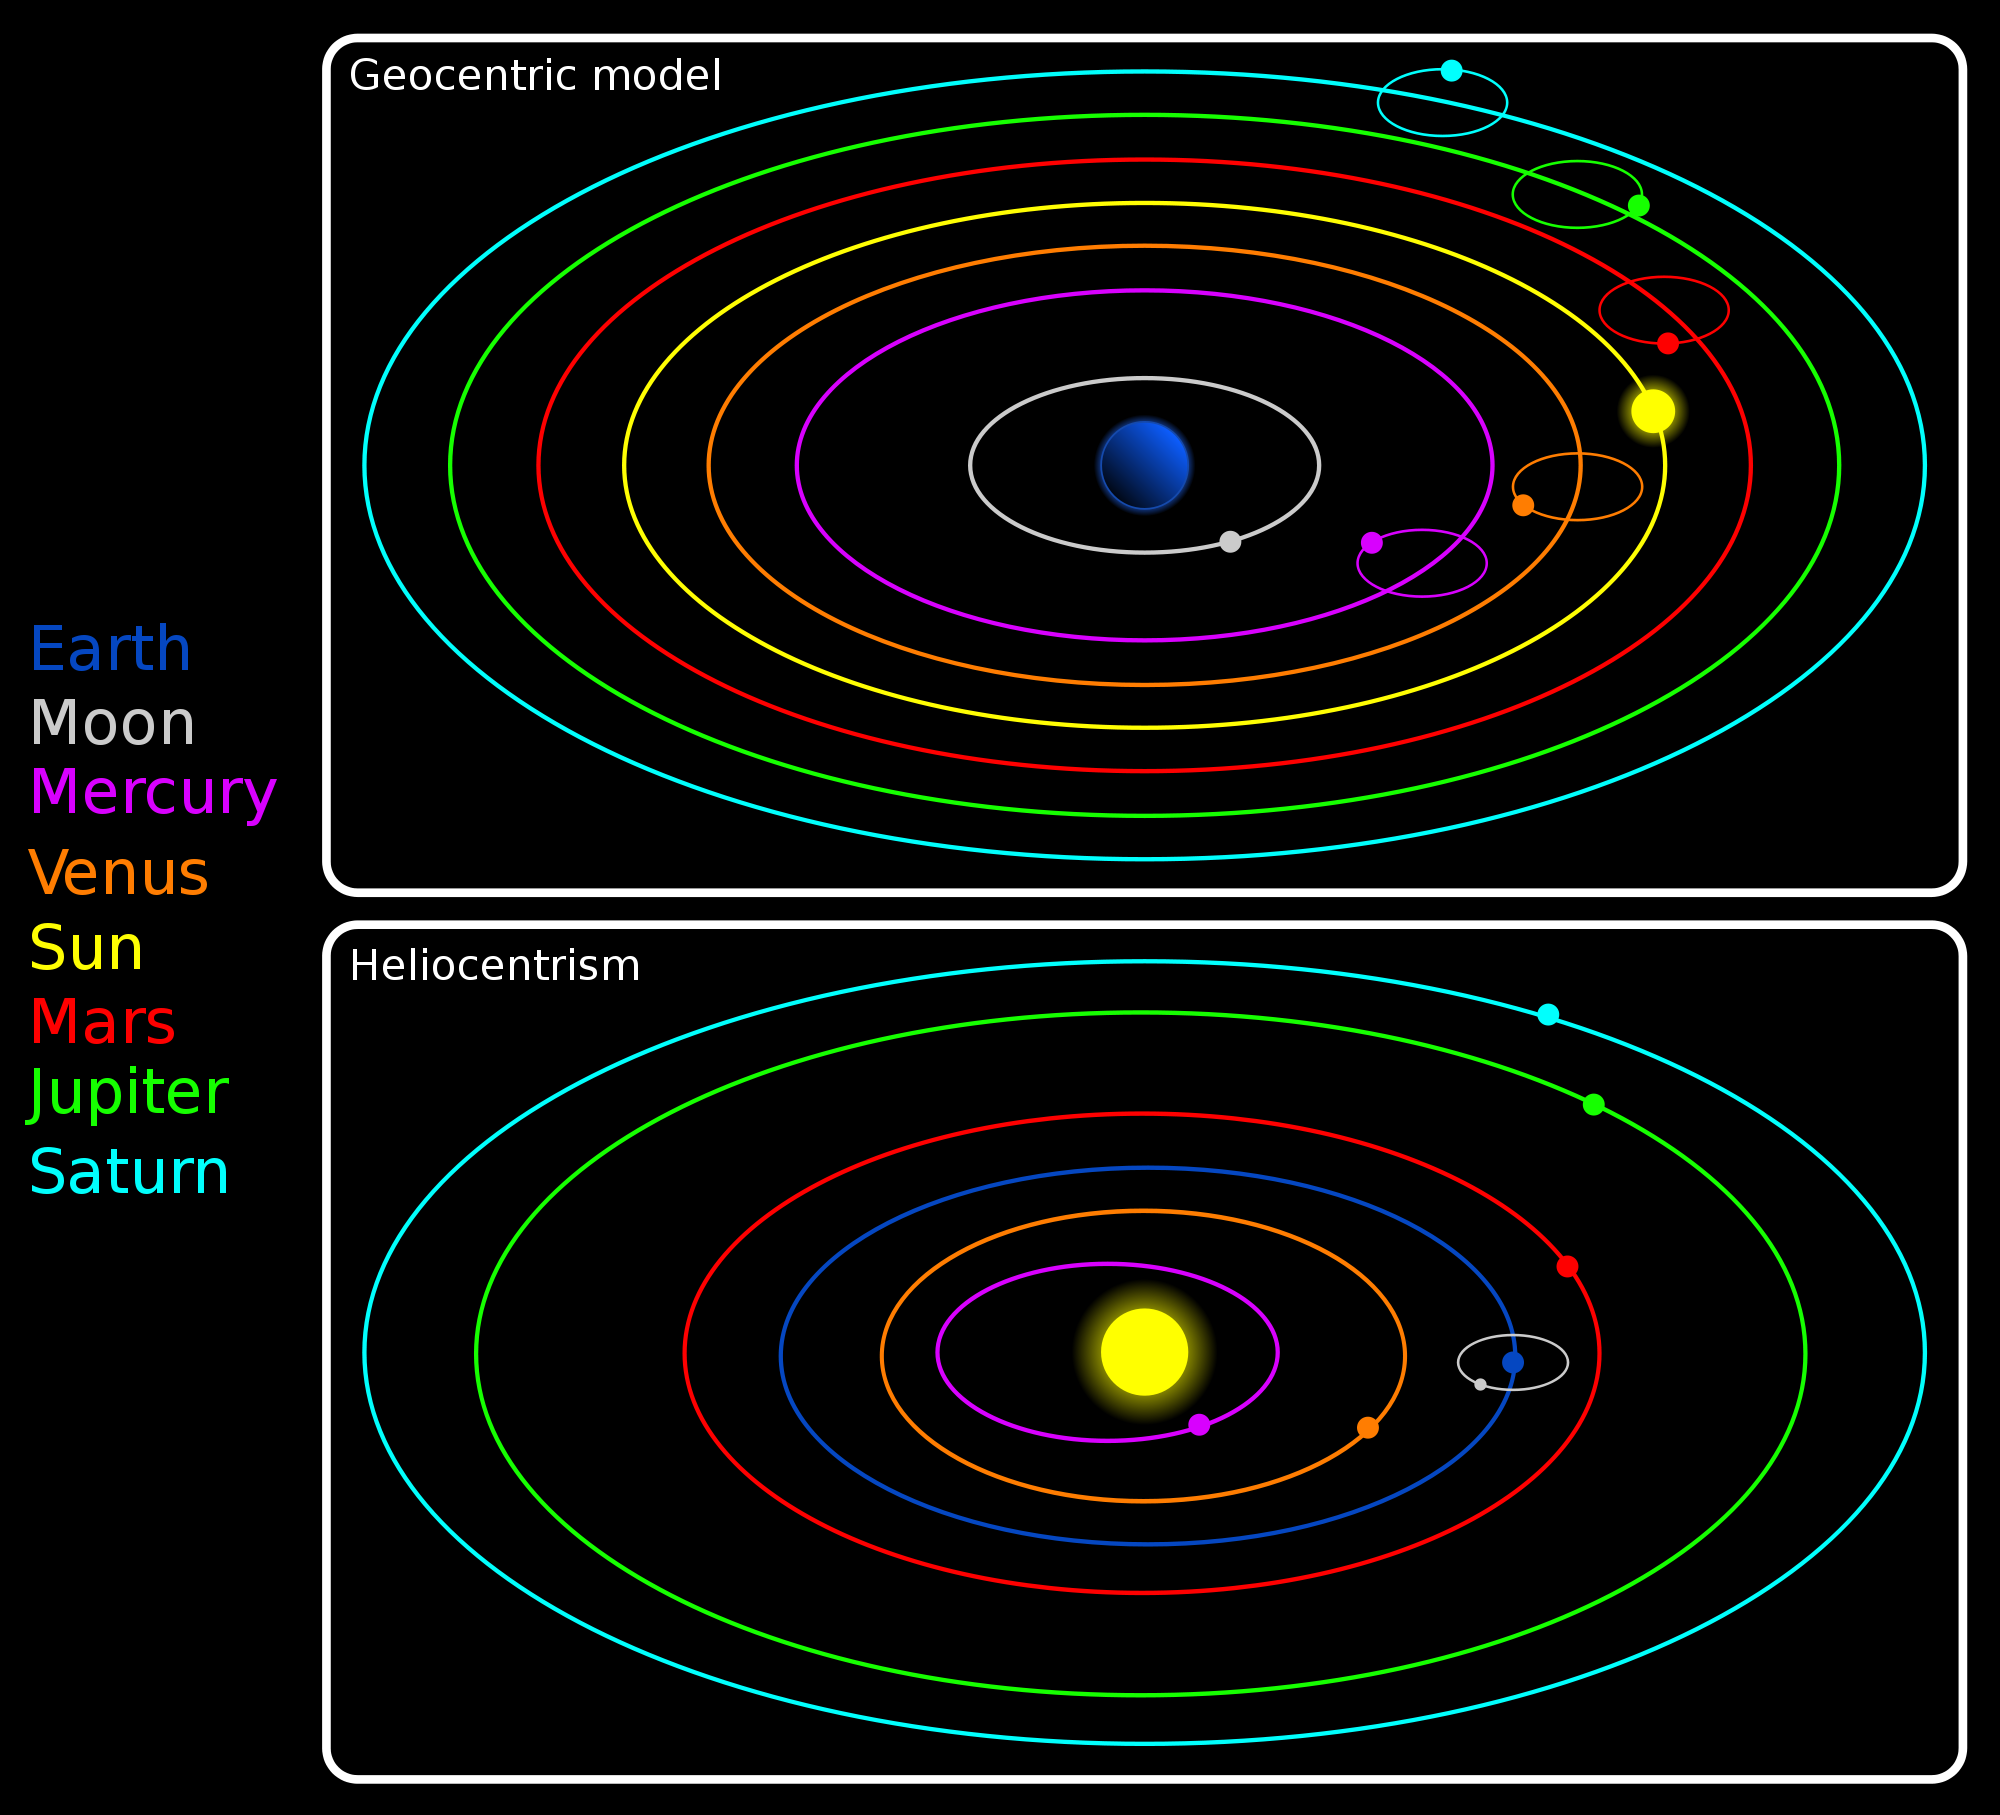 aristotle model of solar system